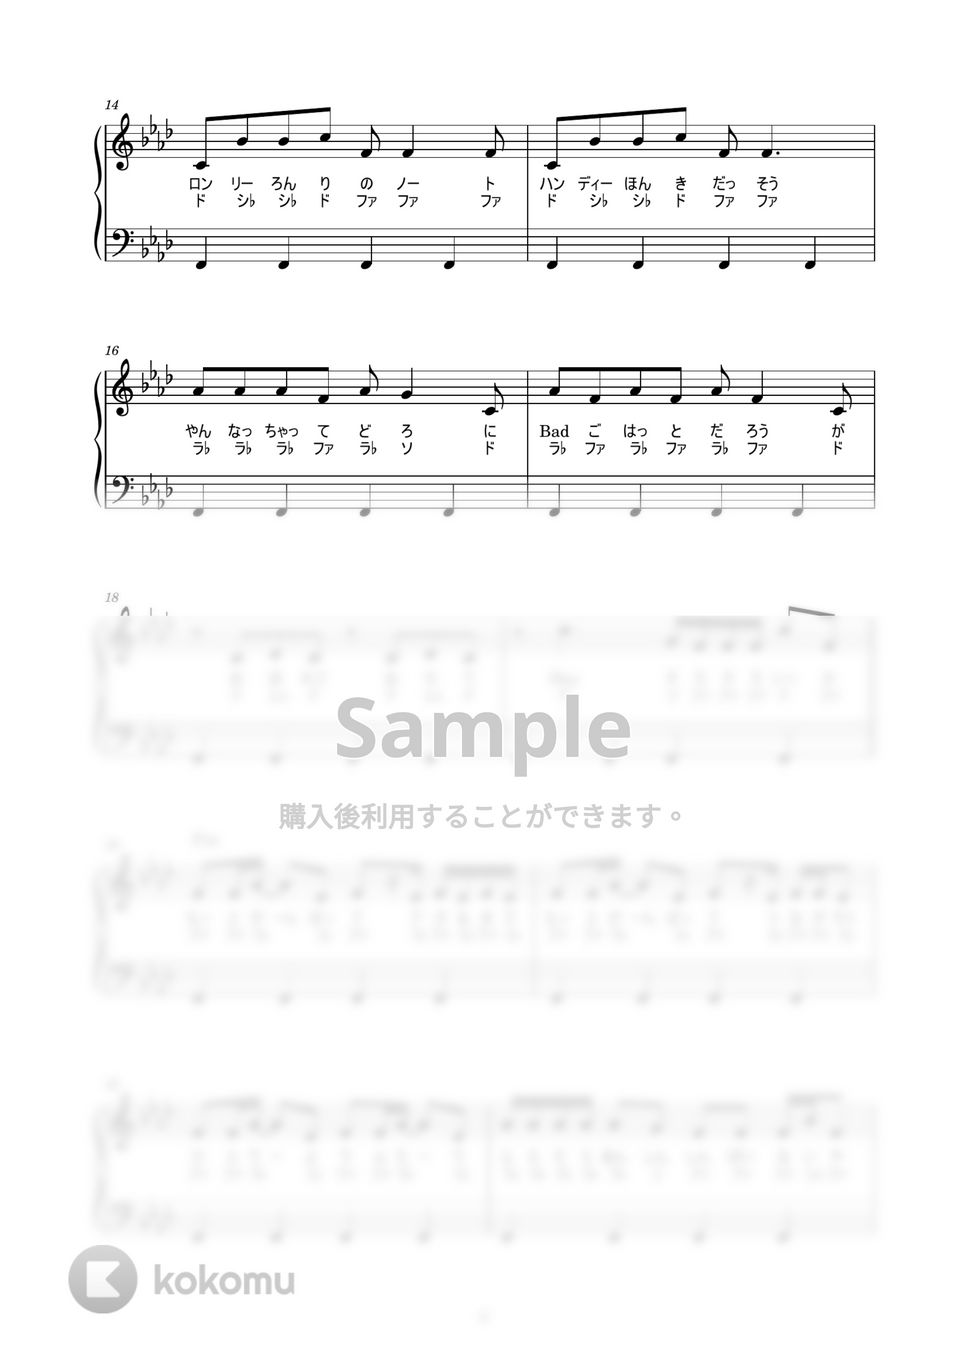 Ado - 踊 (かんたん / 歌詞付き / ドレミ付き / 初心者) by piano.tokyo